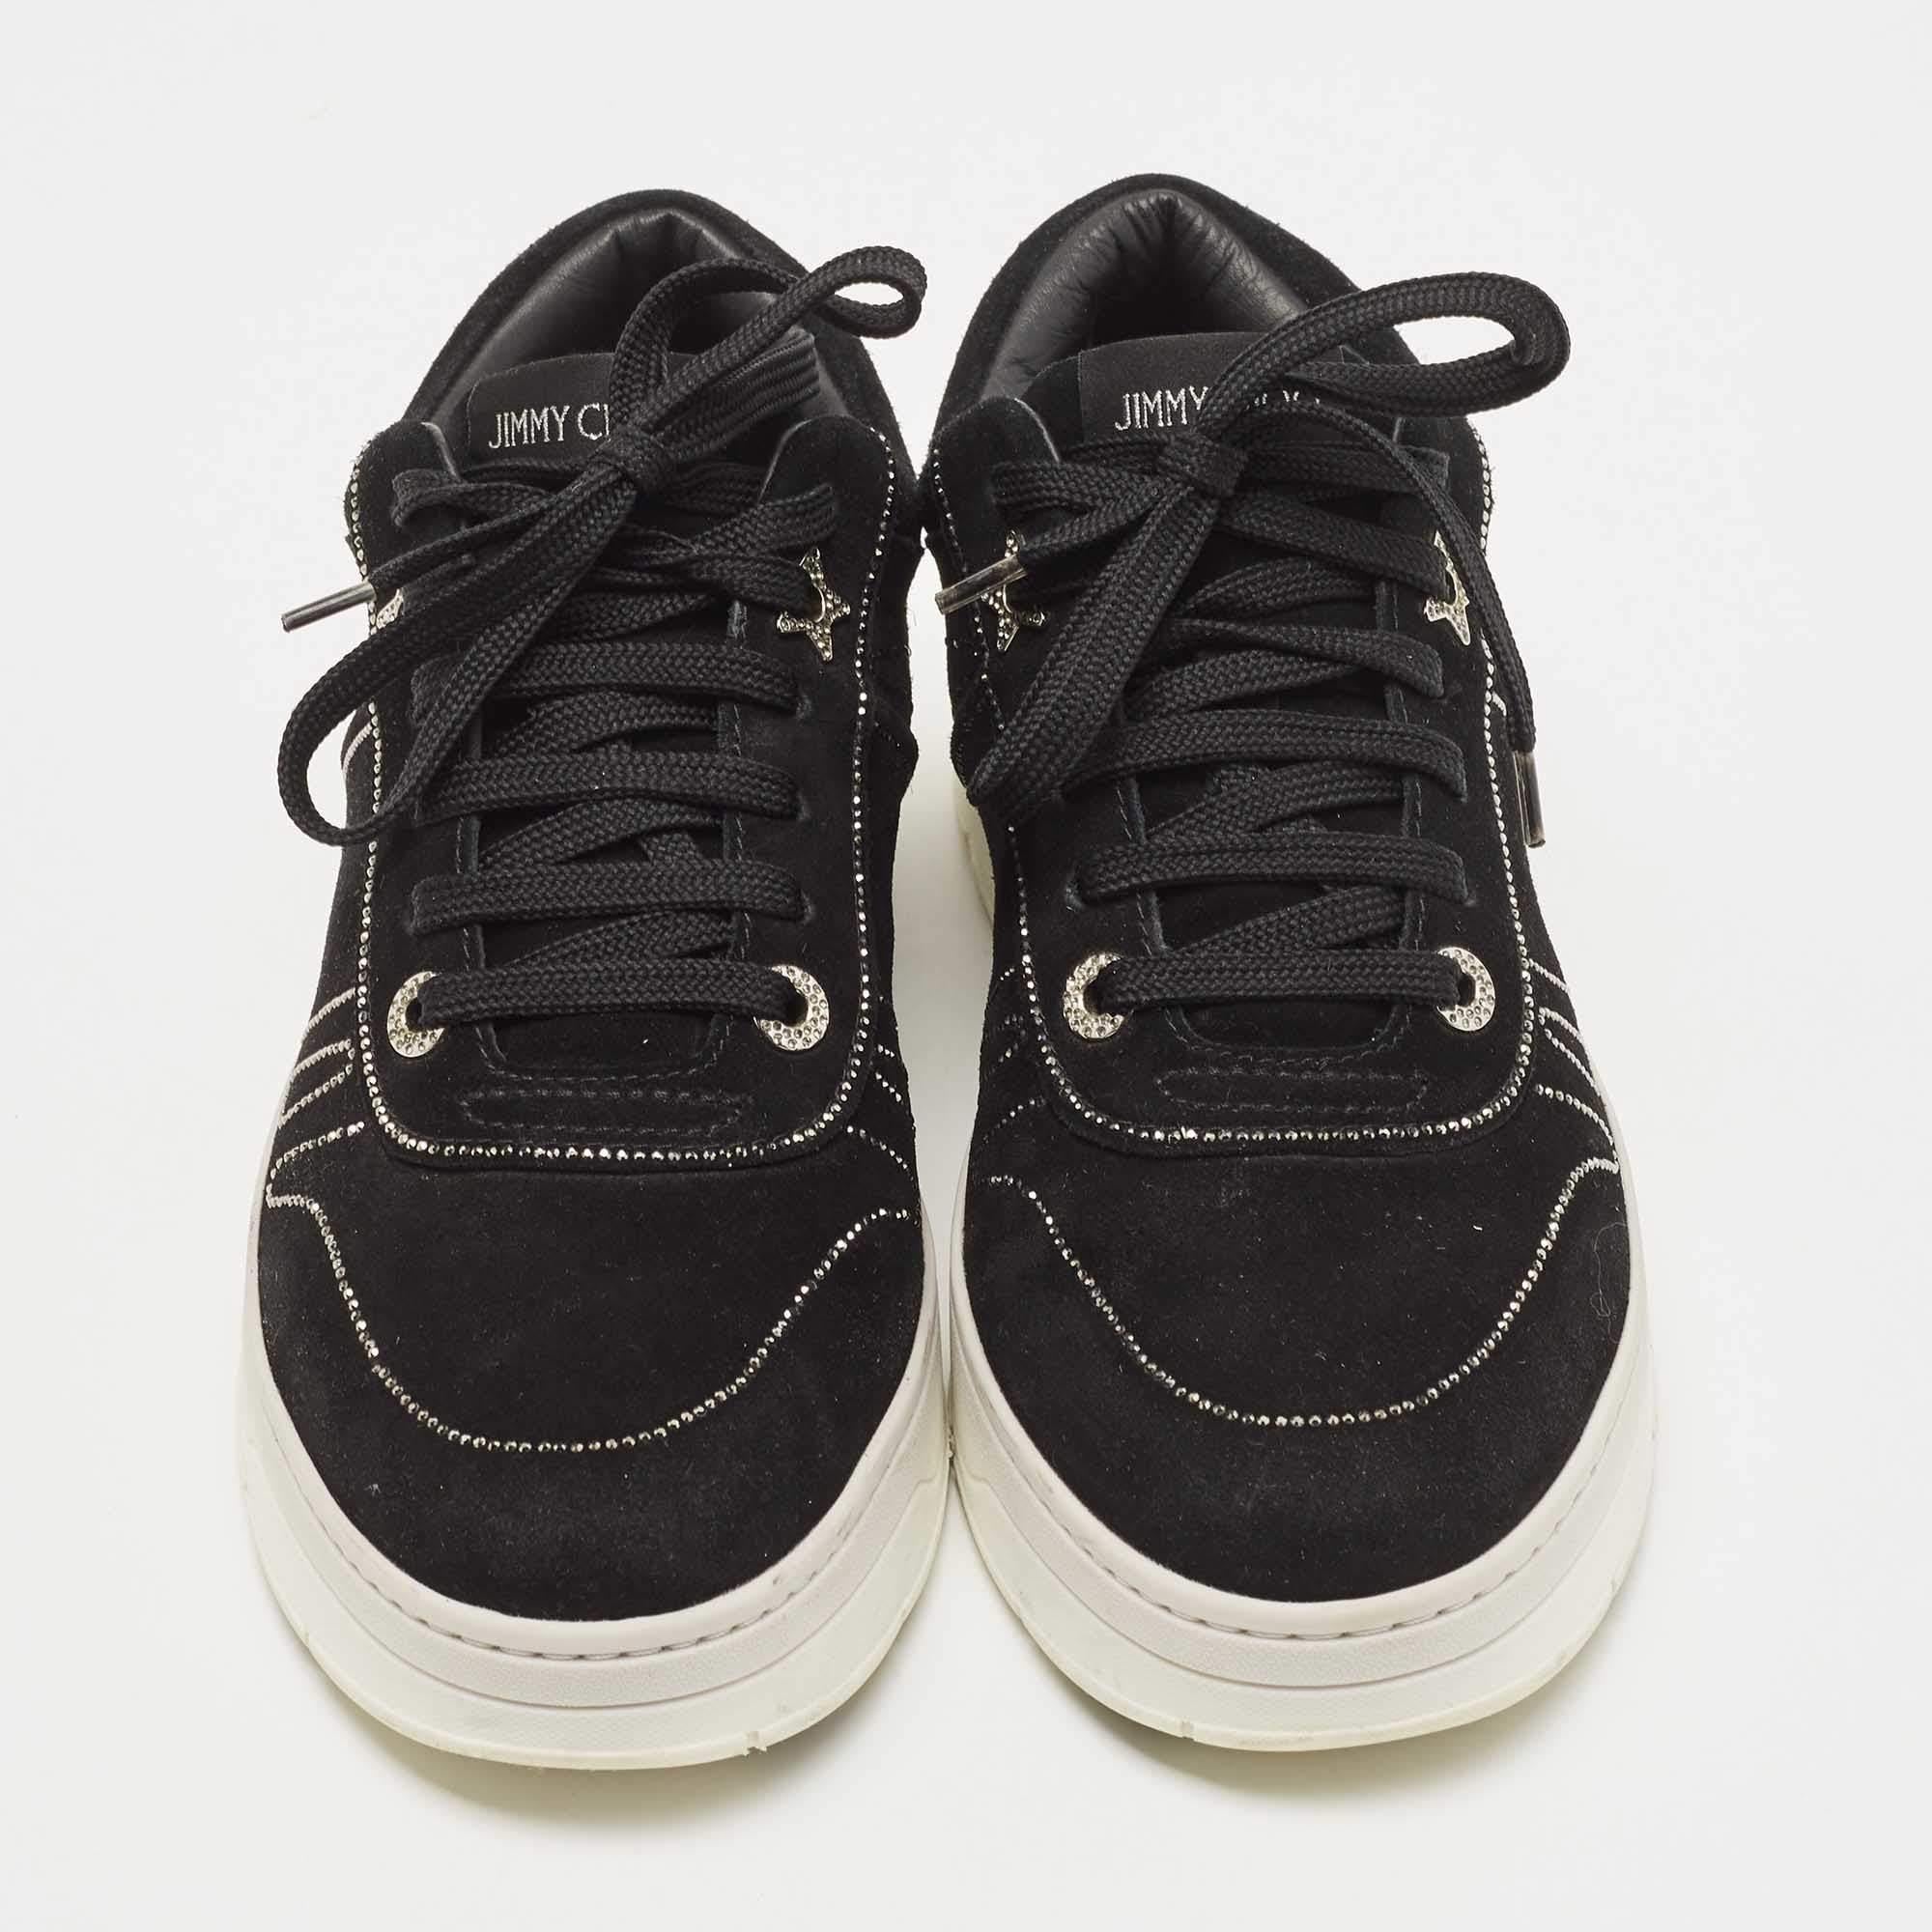 Jimmy Choo Black Suede Embellished Low Top Sneakers Size 40 1